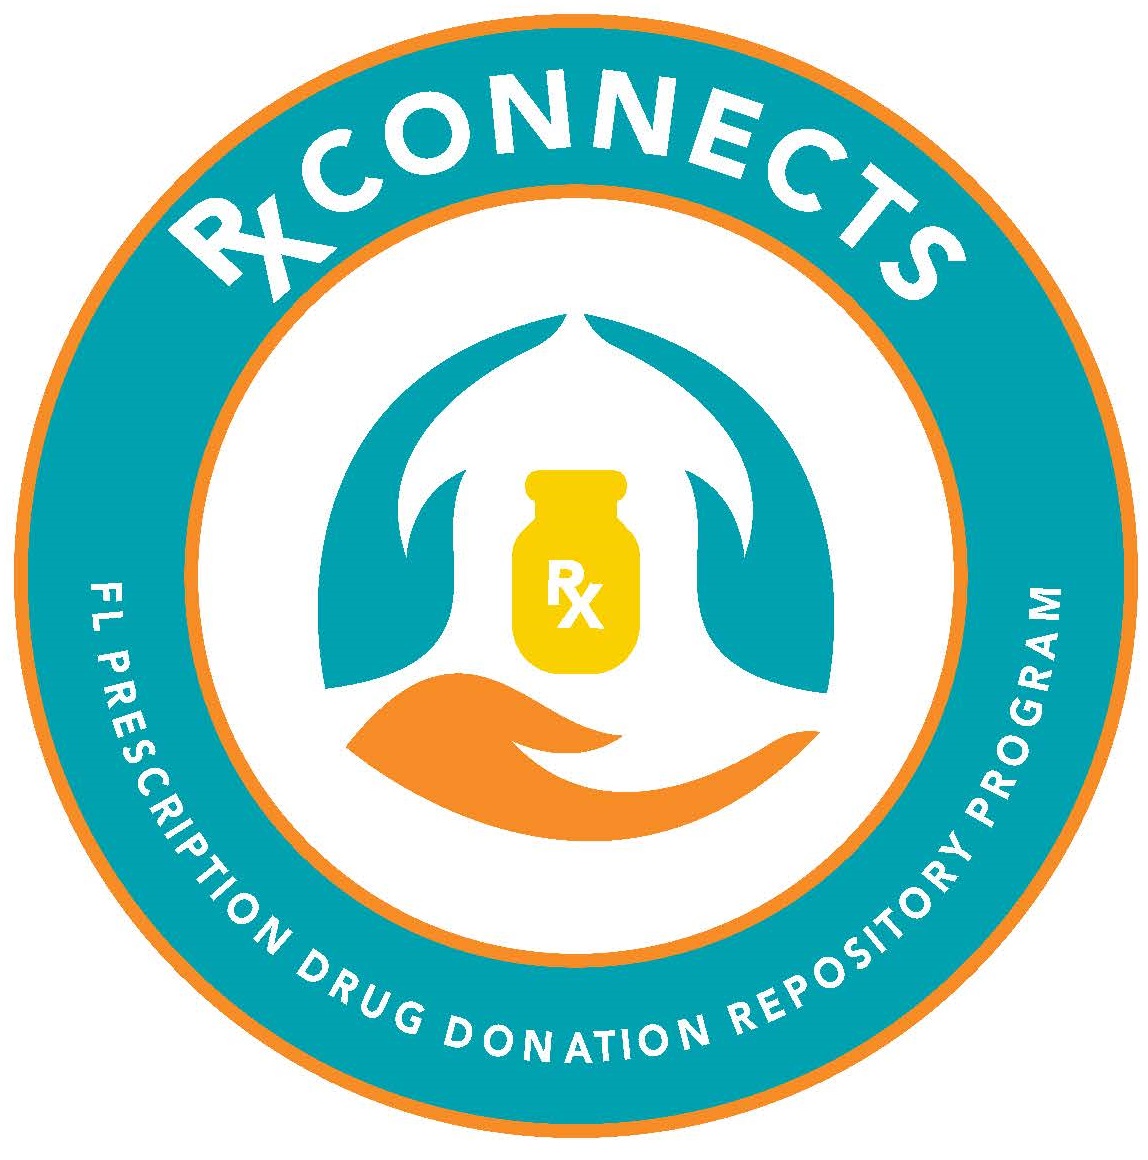 rx logo